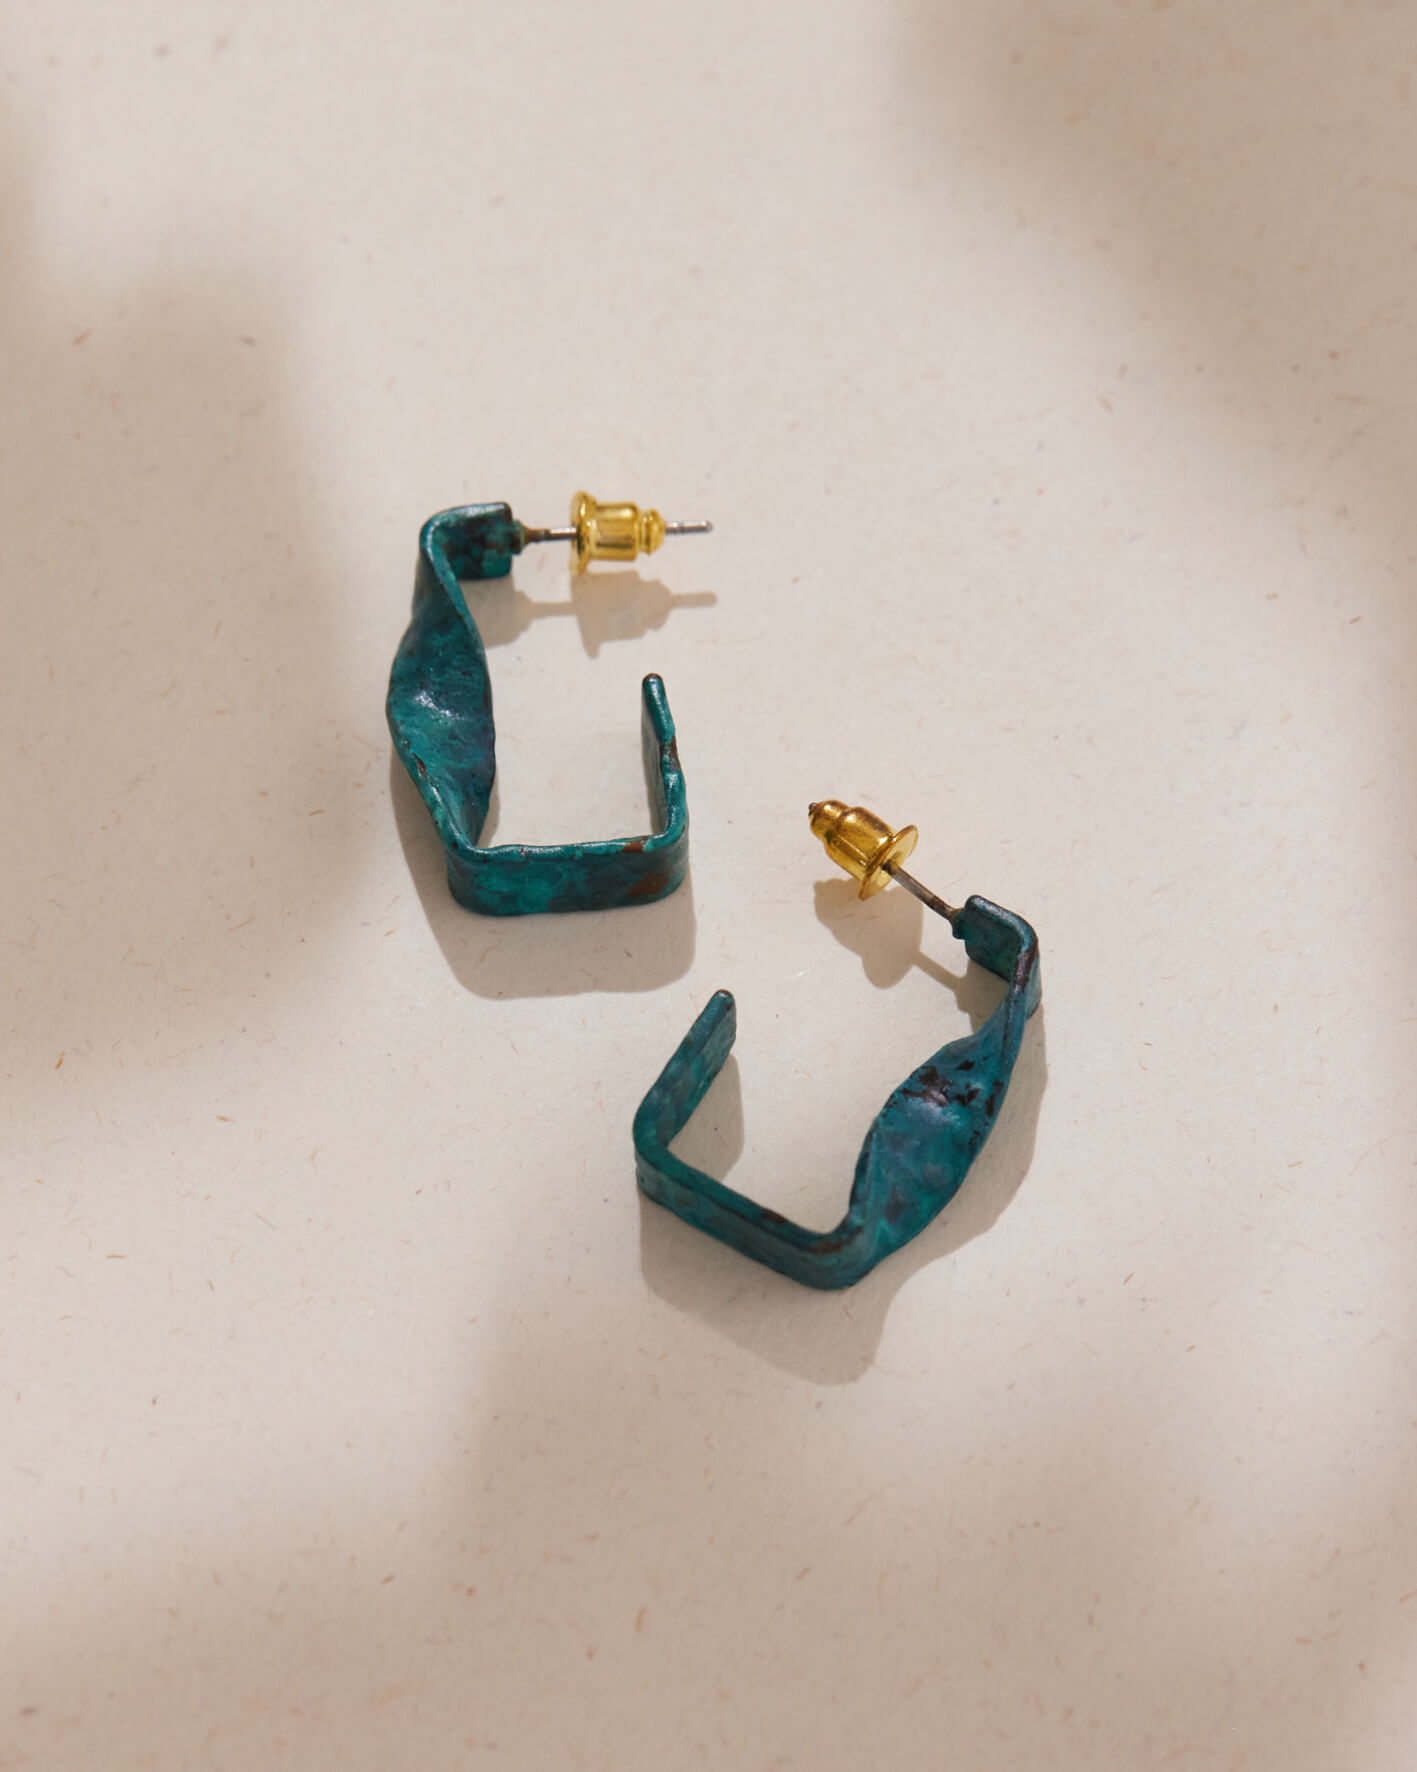 Eco安珂,韓國飾品,韓國耳環,耳針式耳環,方框耳環,藍綠色耳環,仿舊耳環